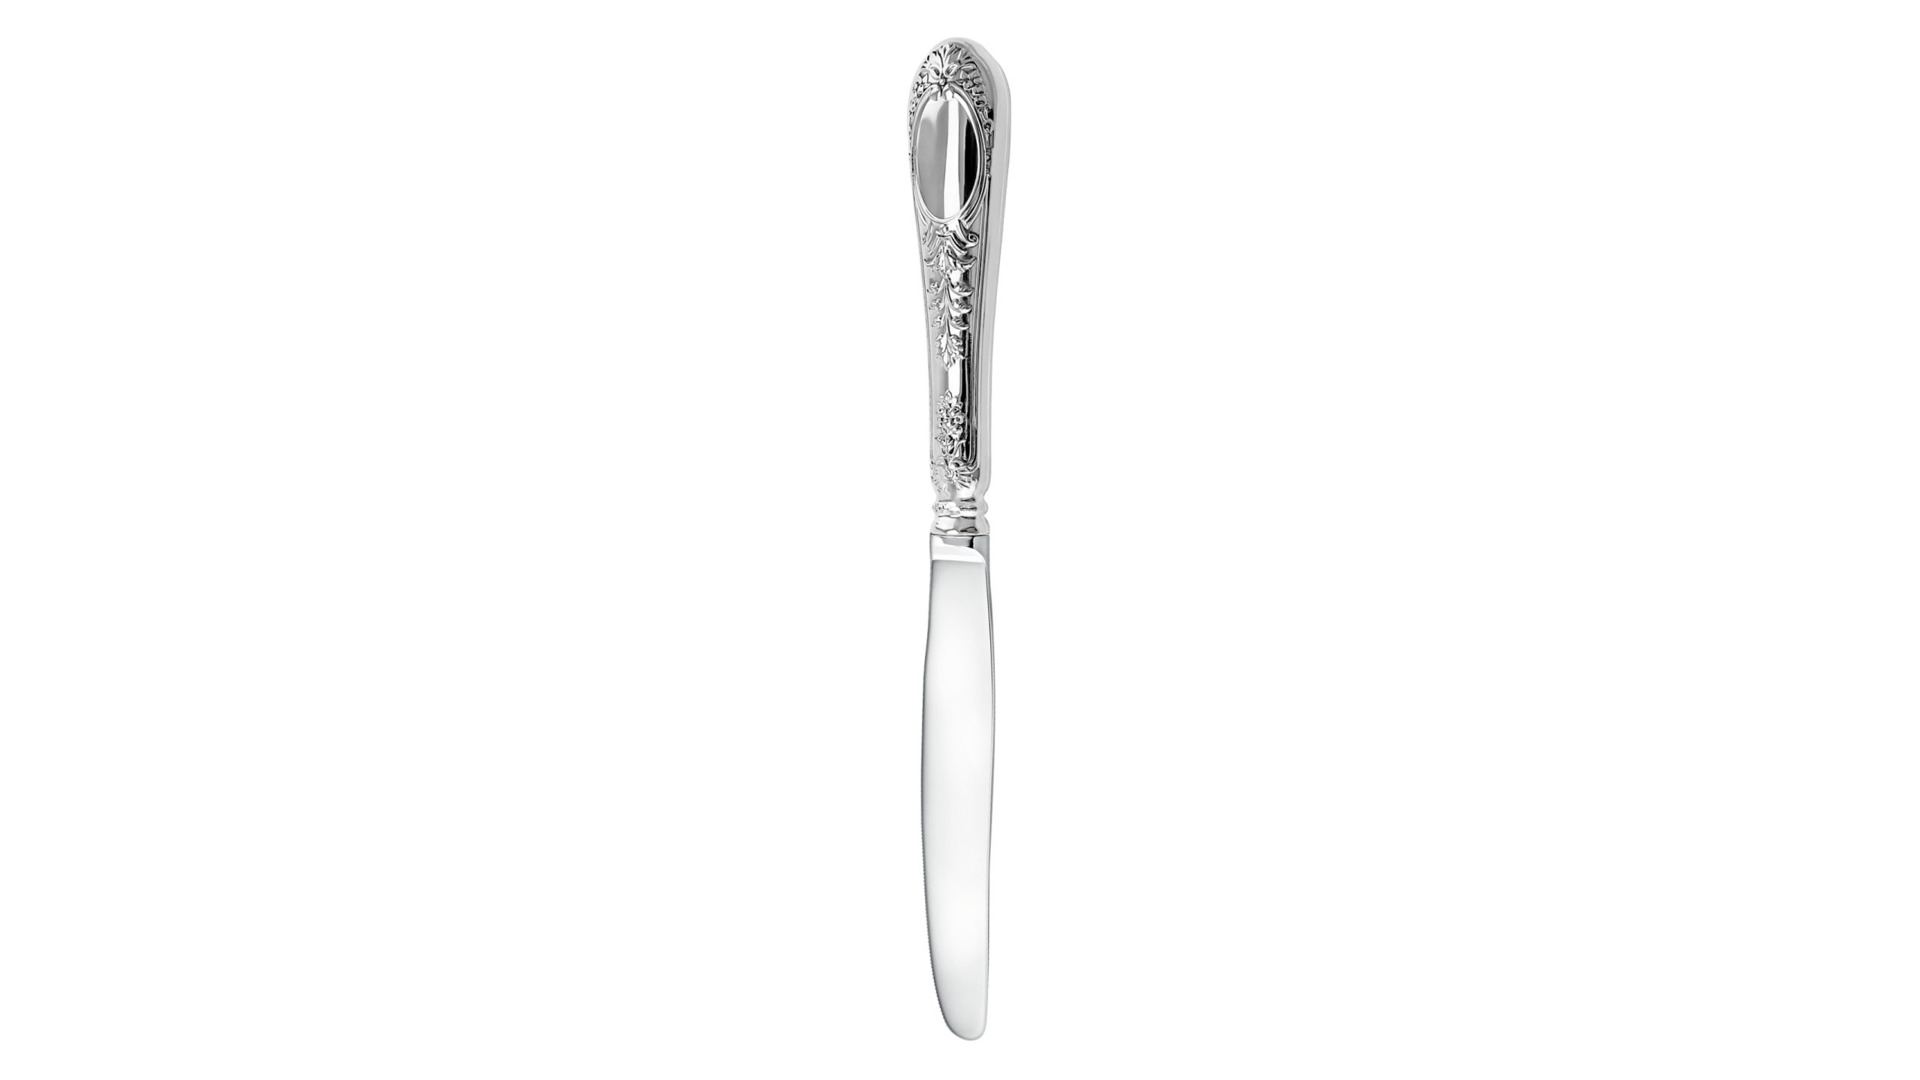 Нож десертный АргентА Фамильная 109,16 г, серебро 925